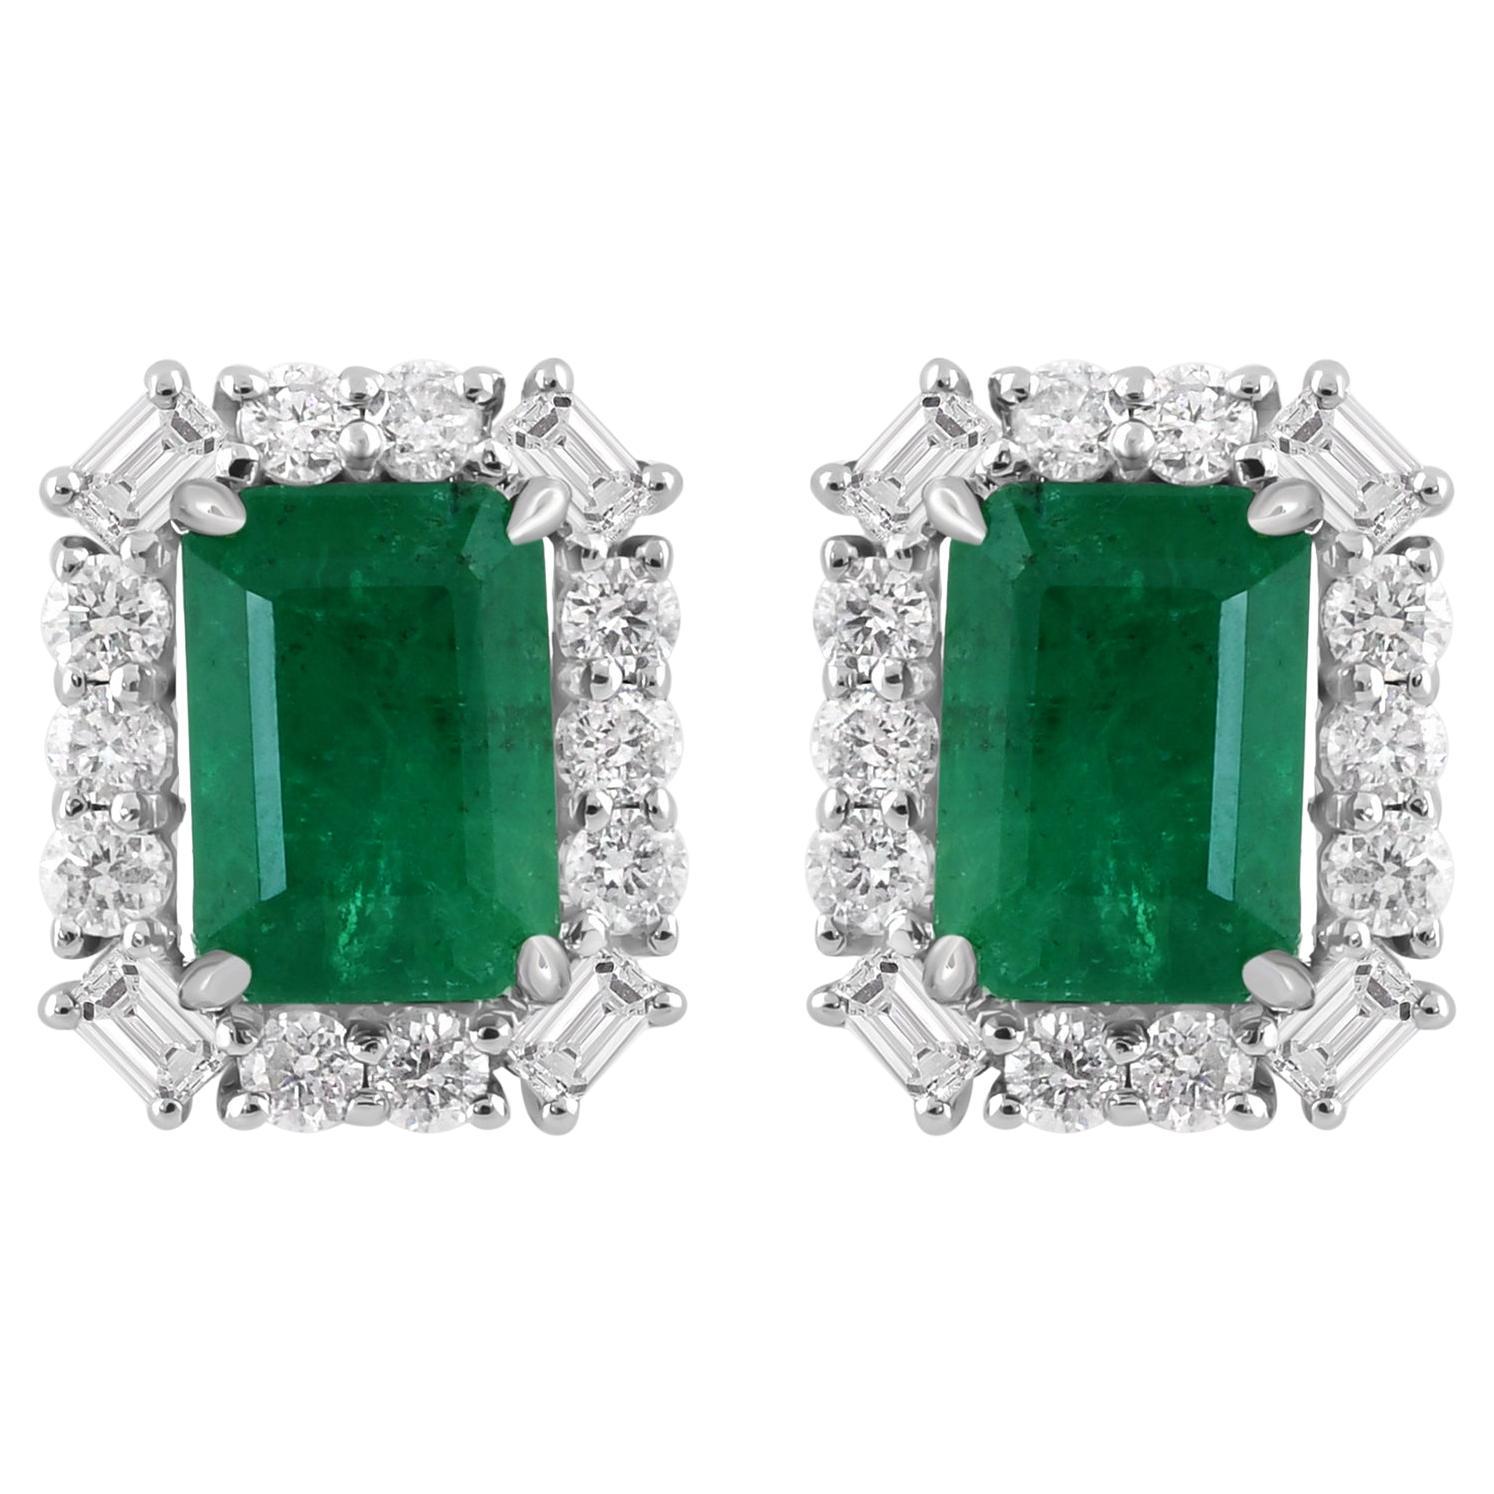 Natural Zambian Emerald Earrings Diamond 14 Karat White Gold Handmade Jewelry